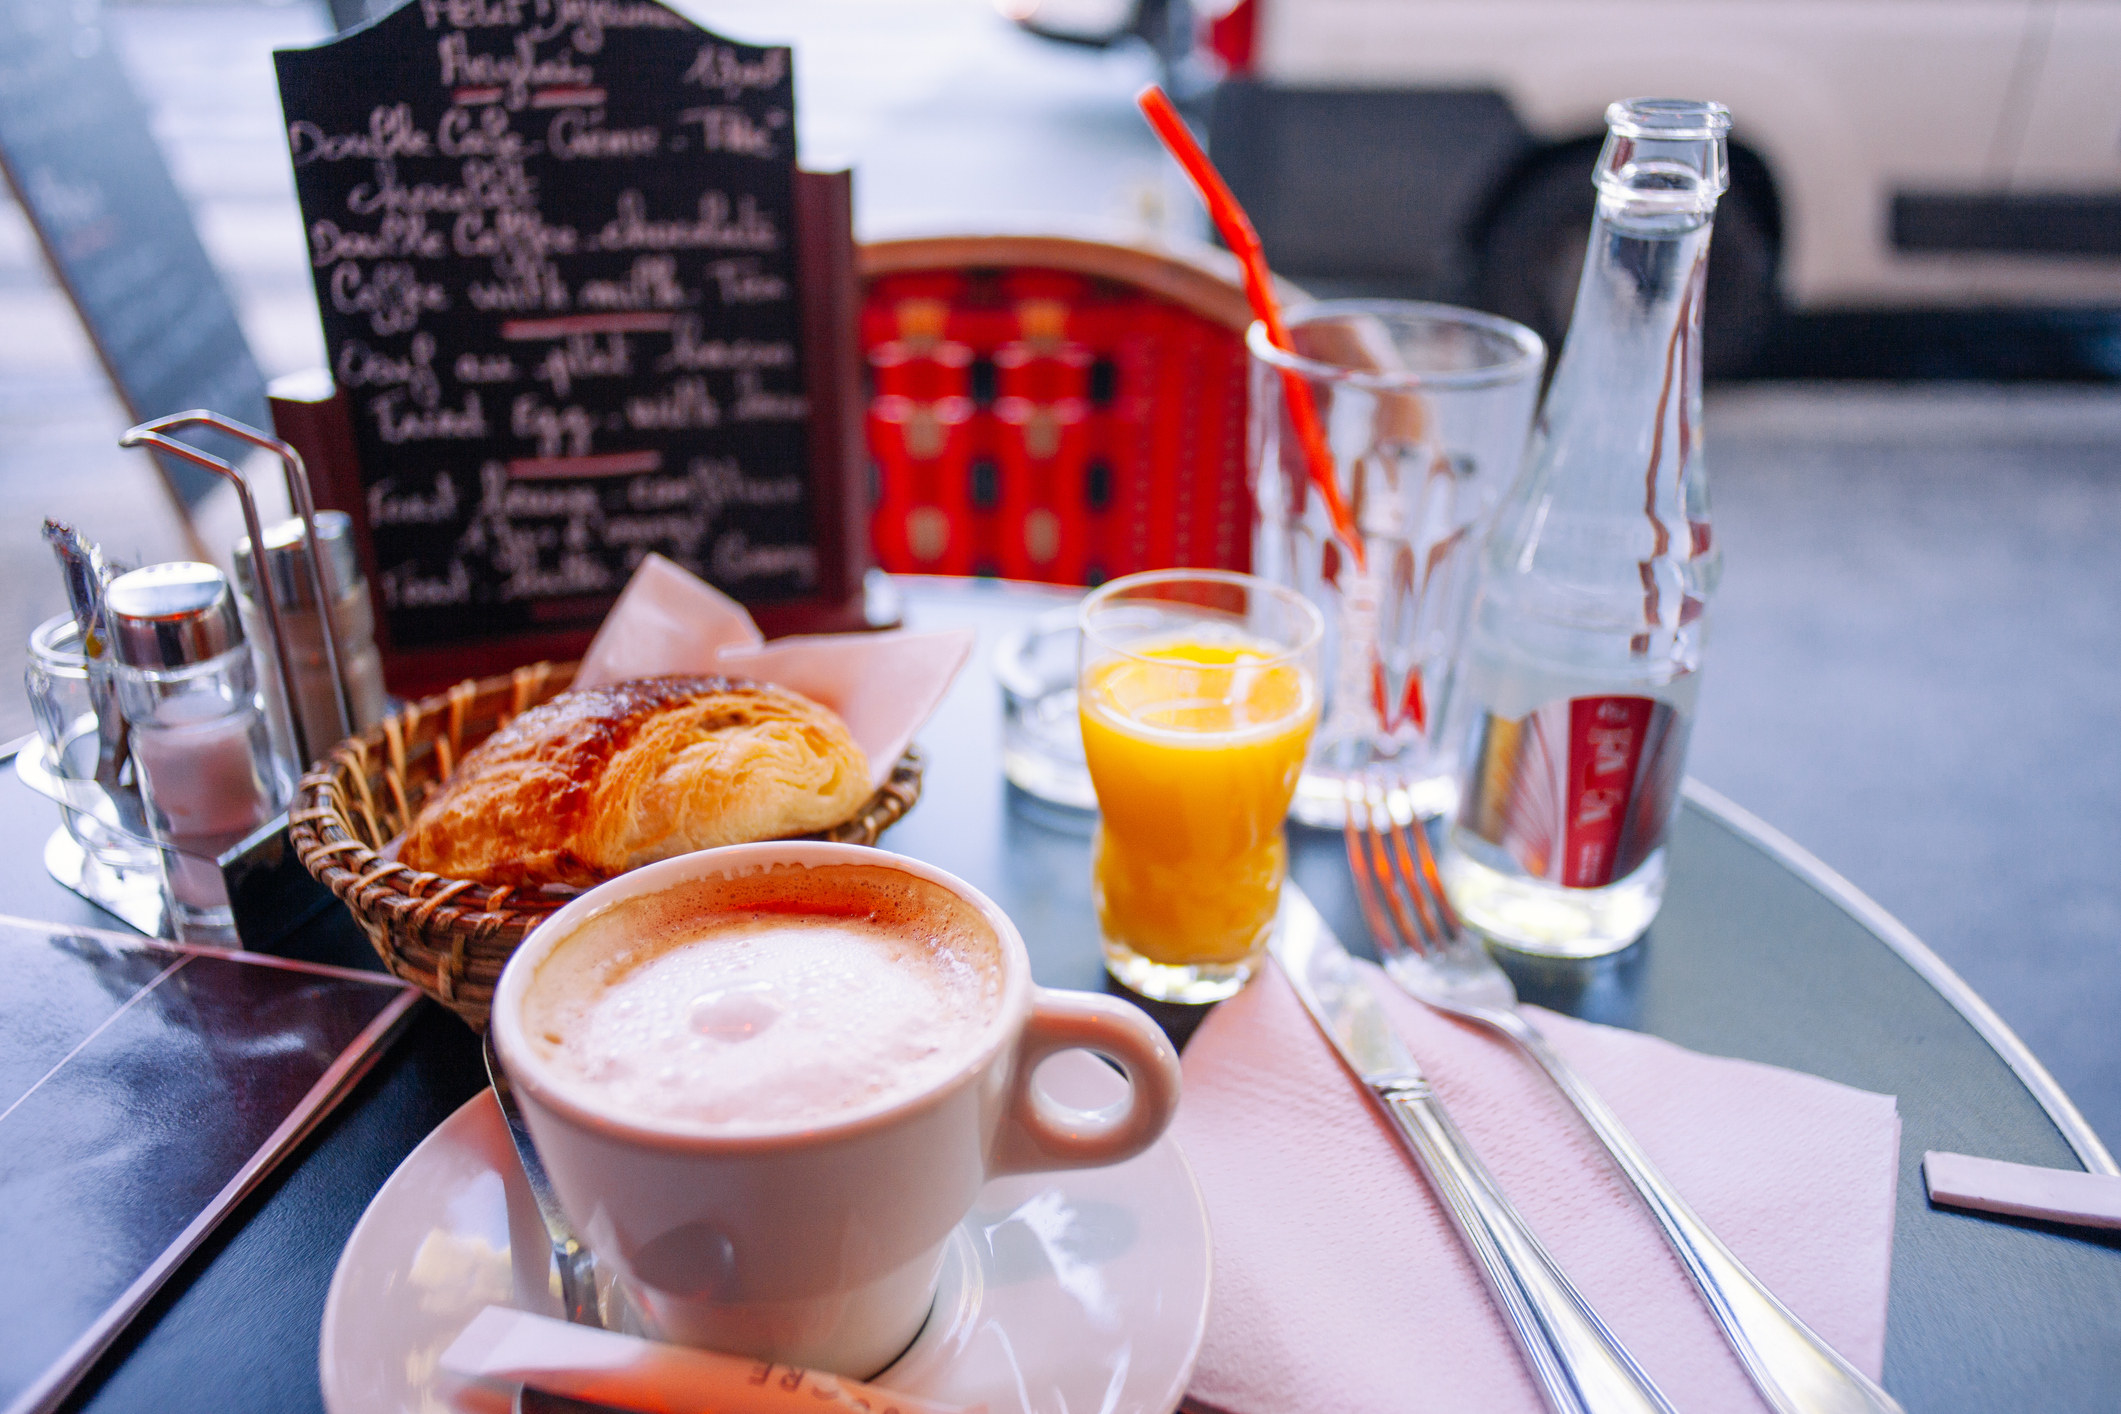 Breakfast on a table in Paris.